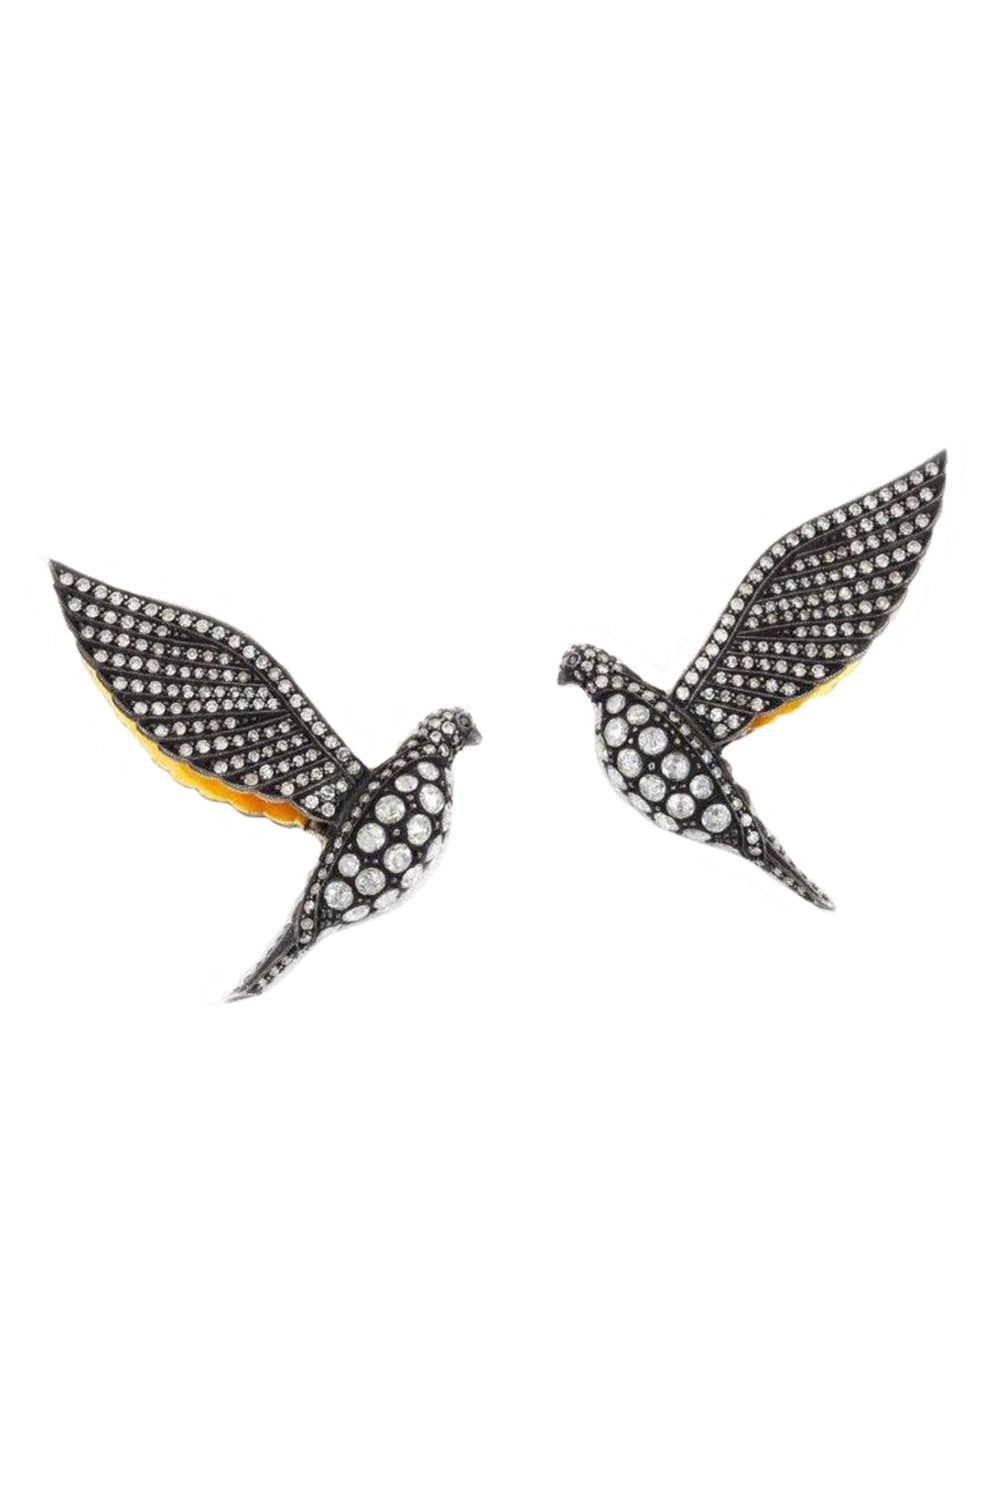 SEVAN BICAKCI-Bird In Flight Earrings-YELLOW GOLD